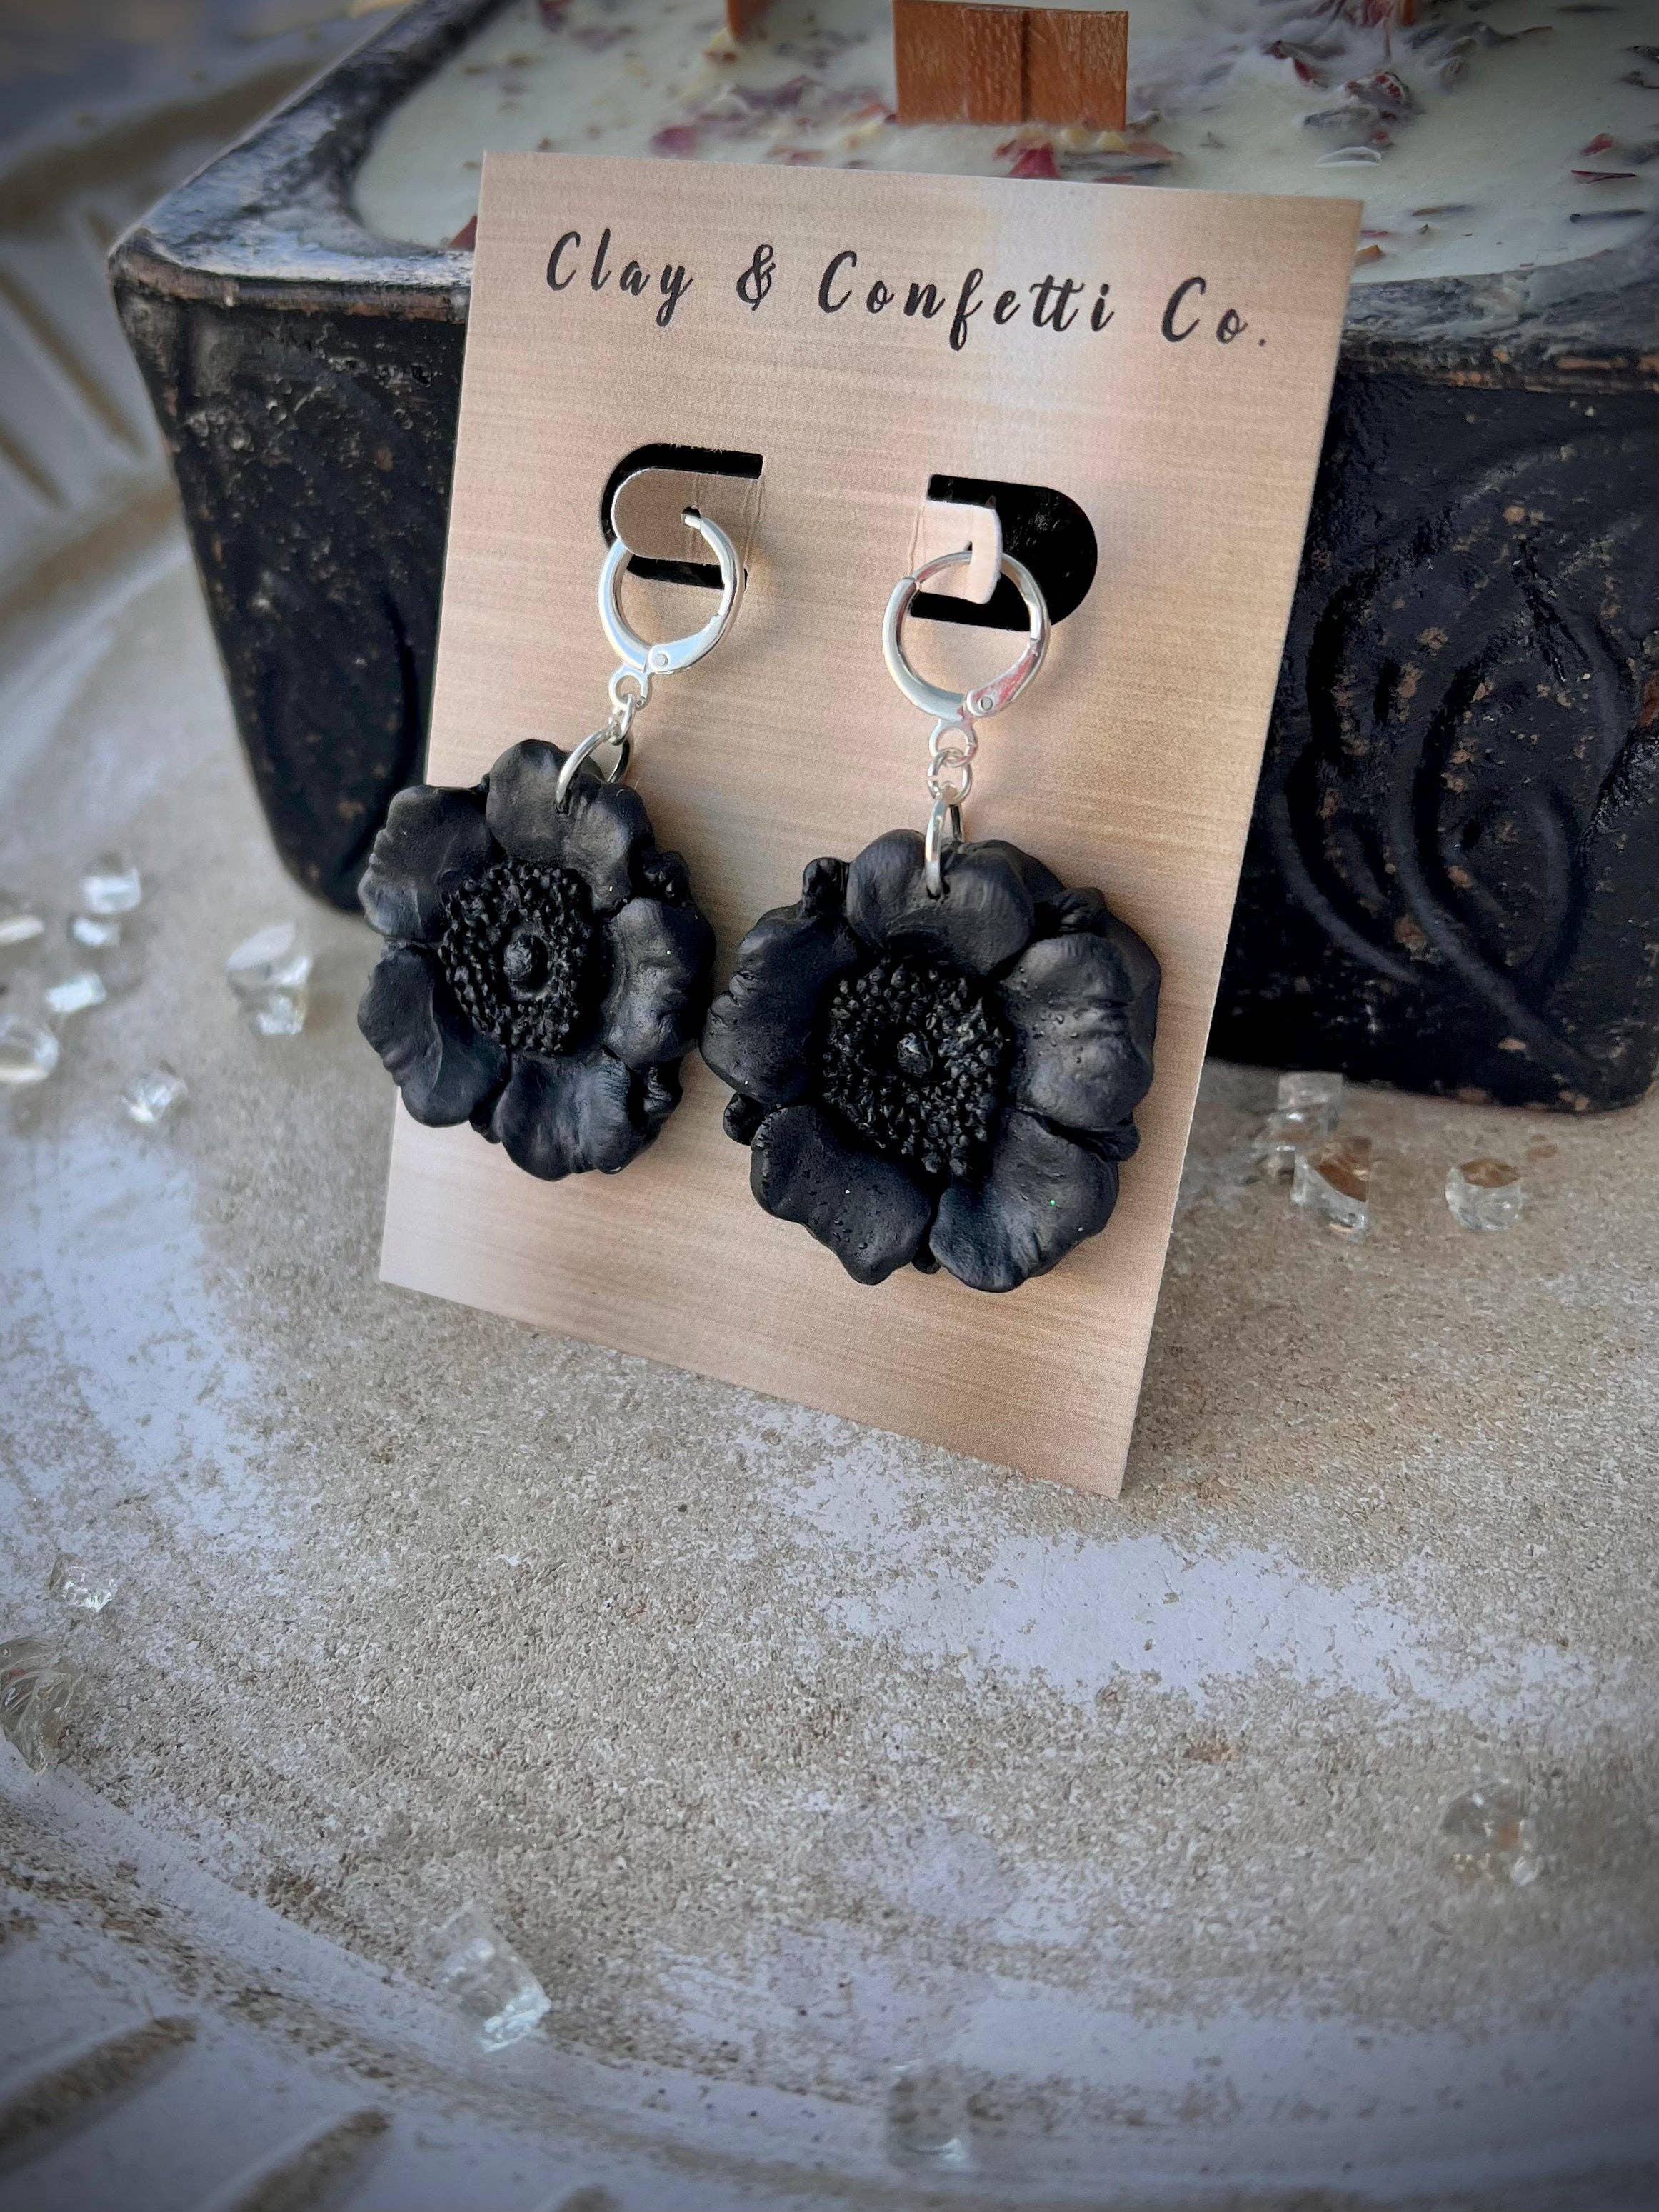 Black Poppy Polymer Clay Earring Design